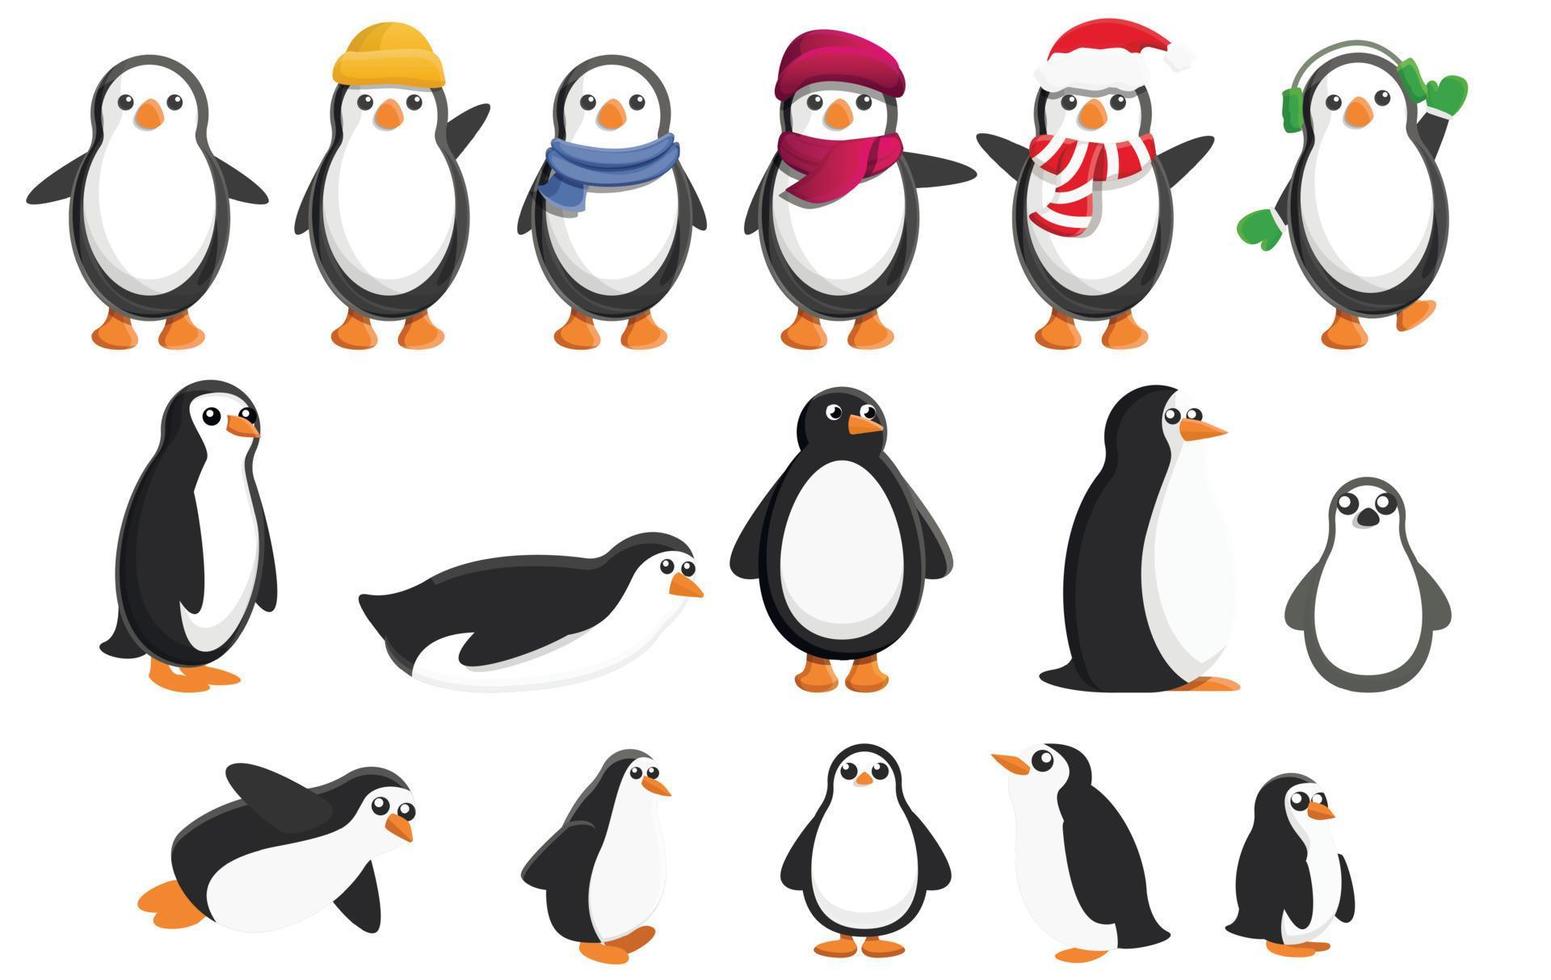 Penguin icons set, cartoon style vector